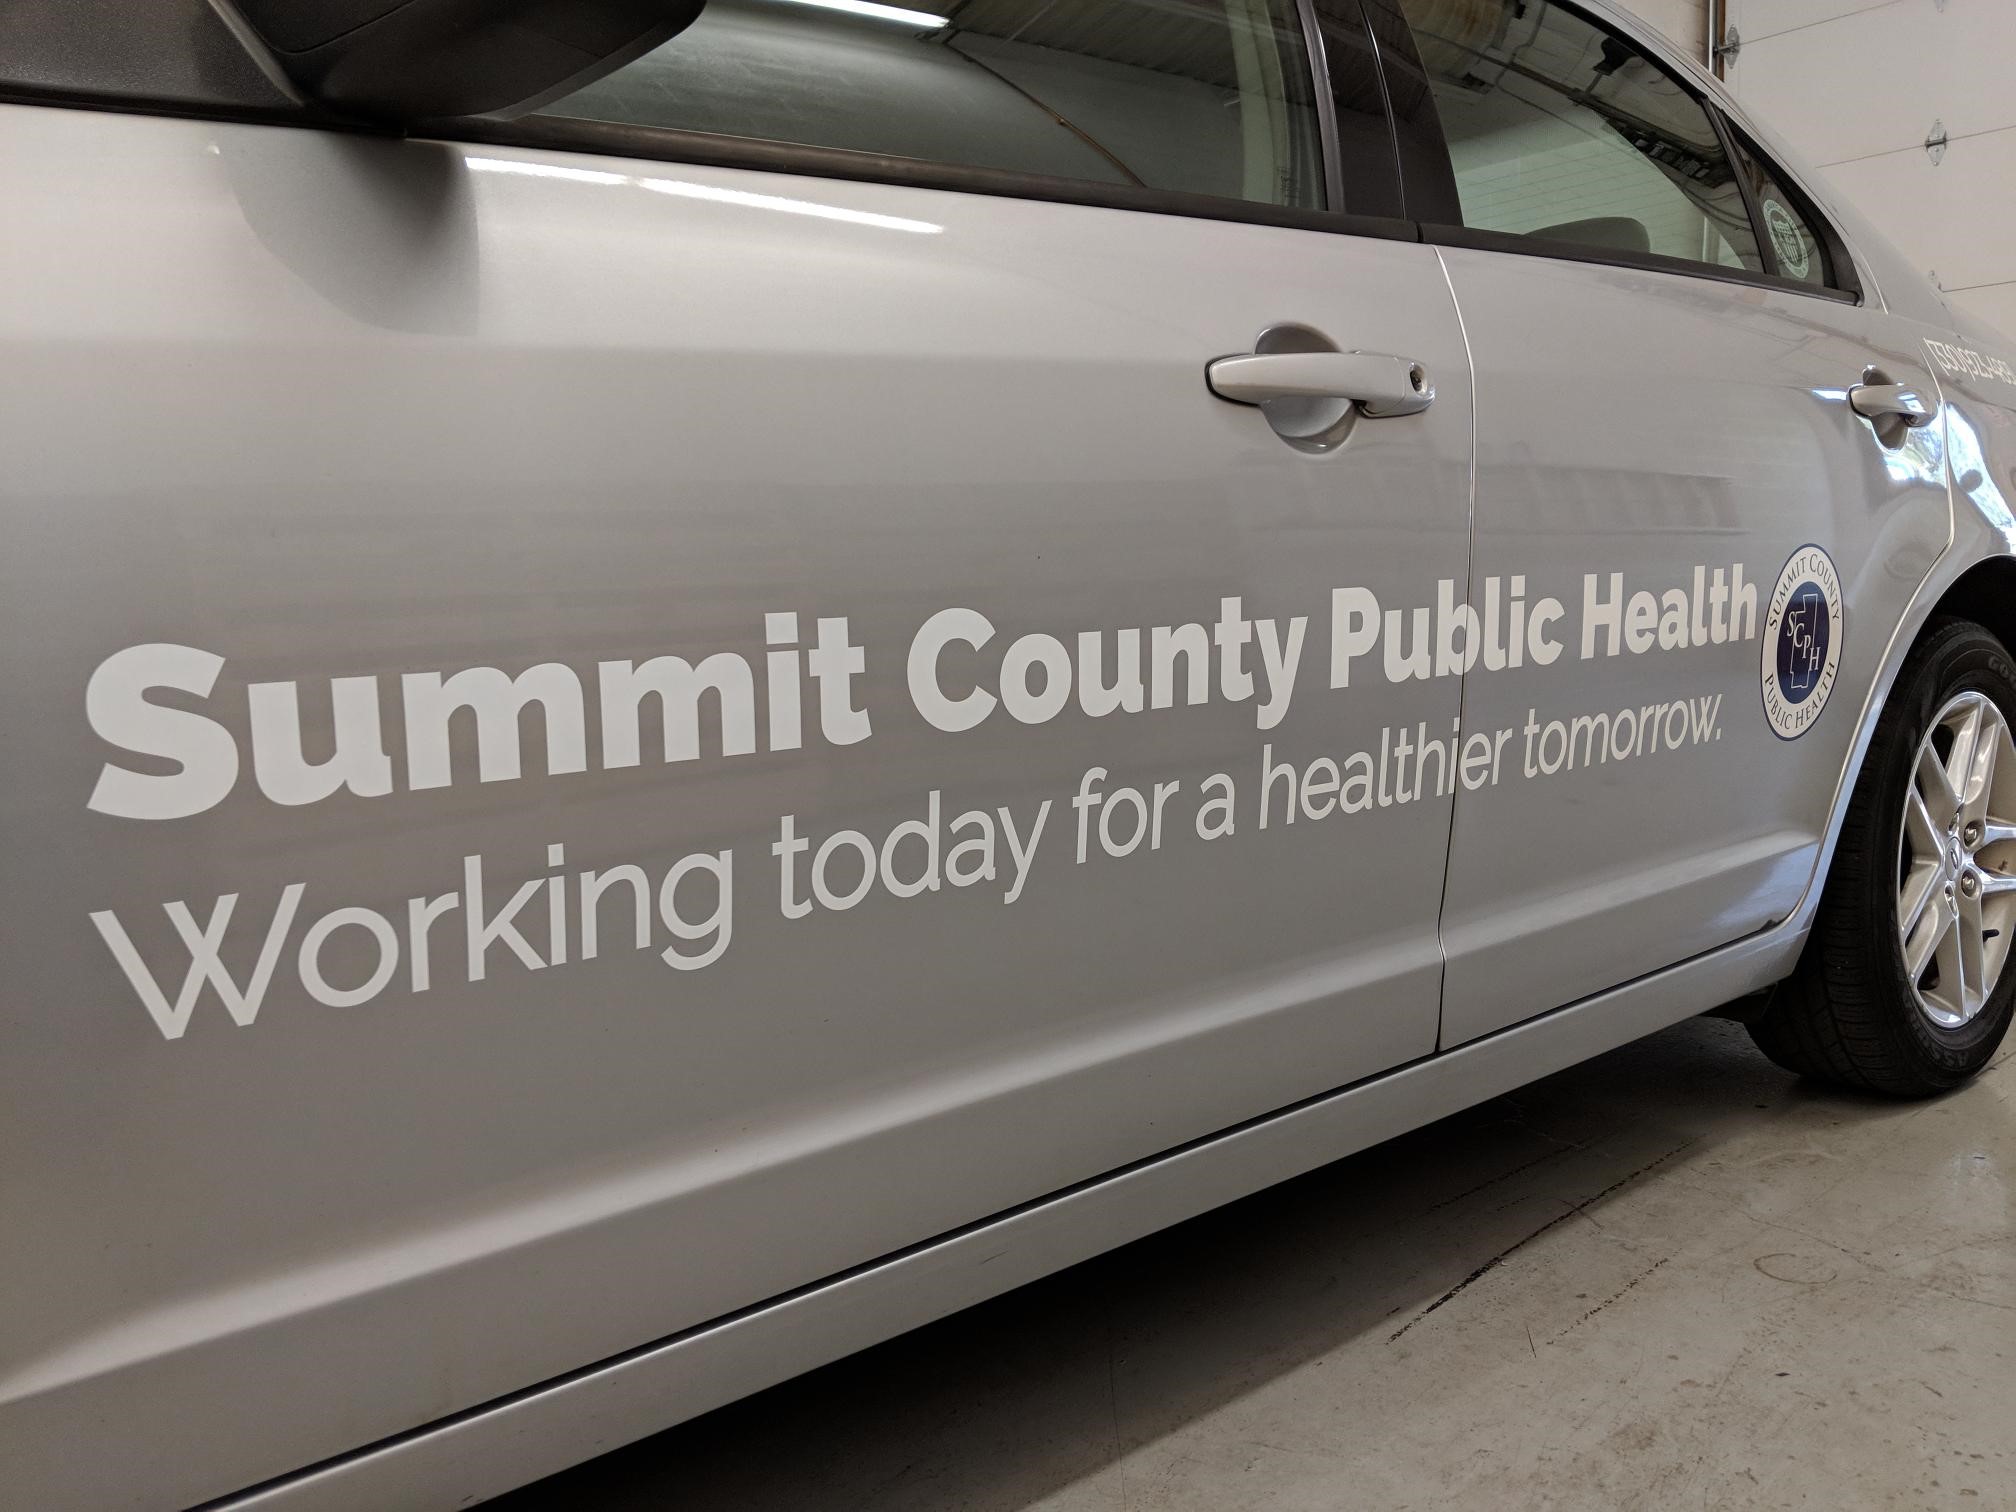 Custom vehicle decal on van for Summit County Public Health